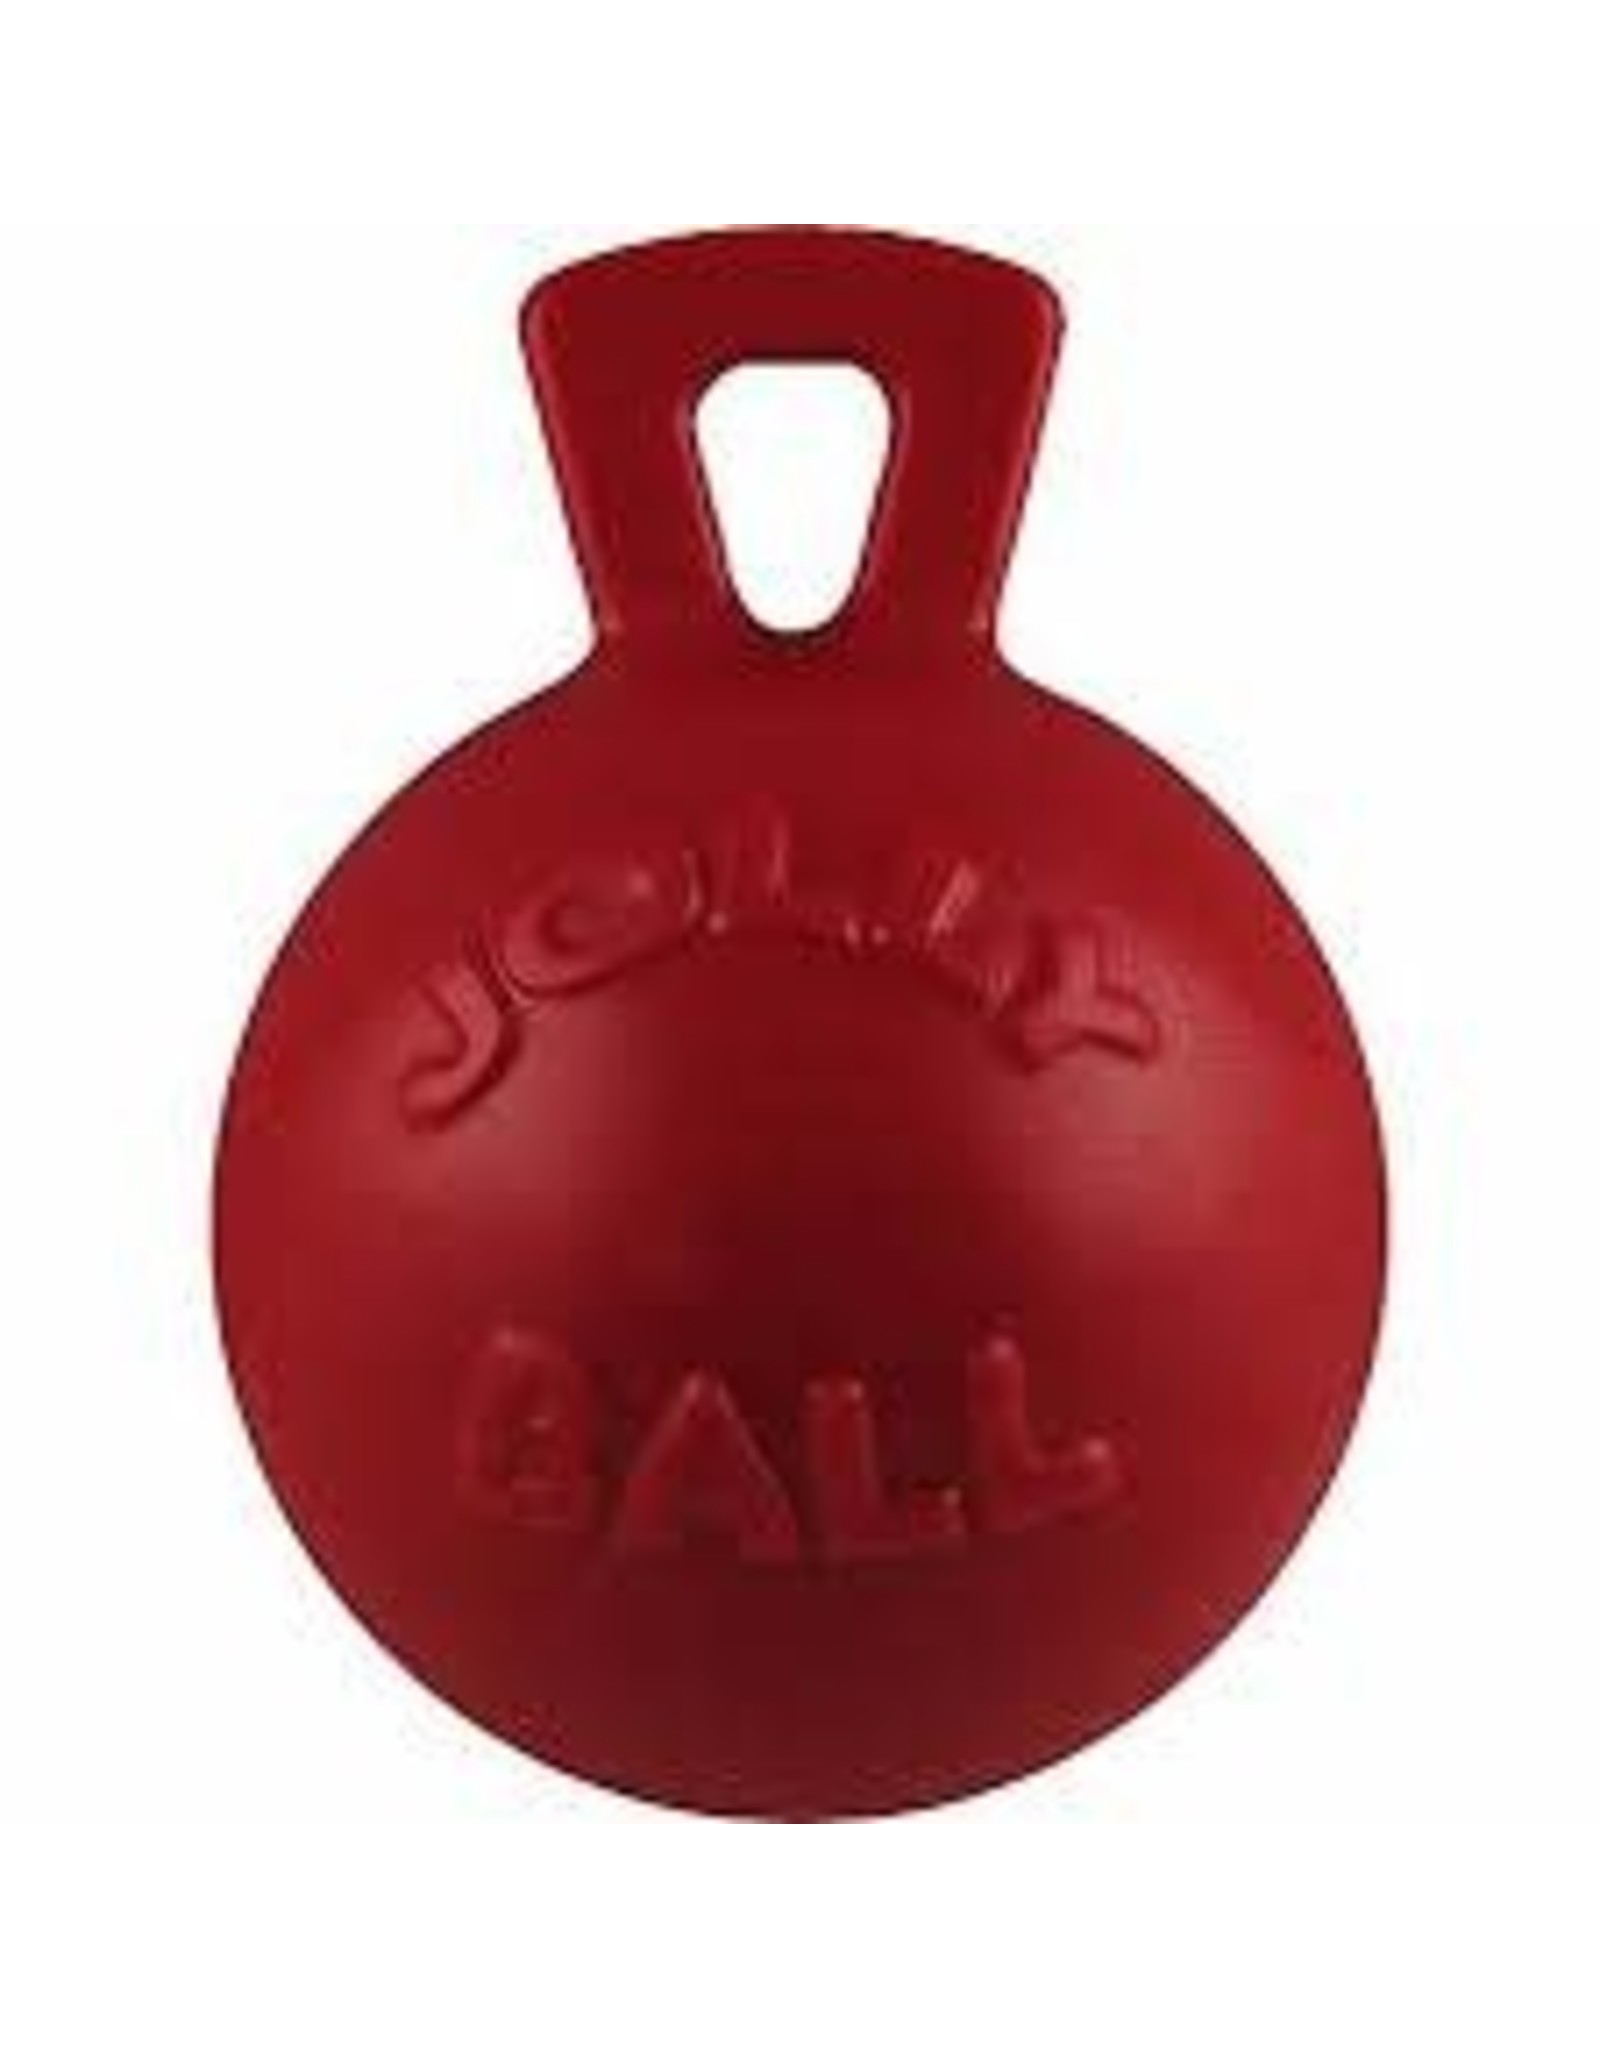 Horsemen's Pride Jolly Ball with Handle 10 inch